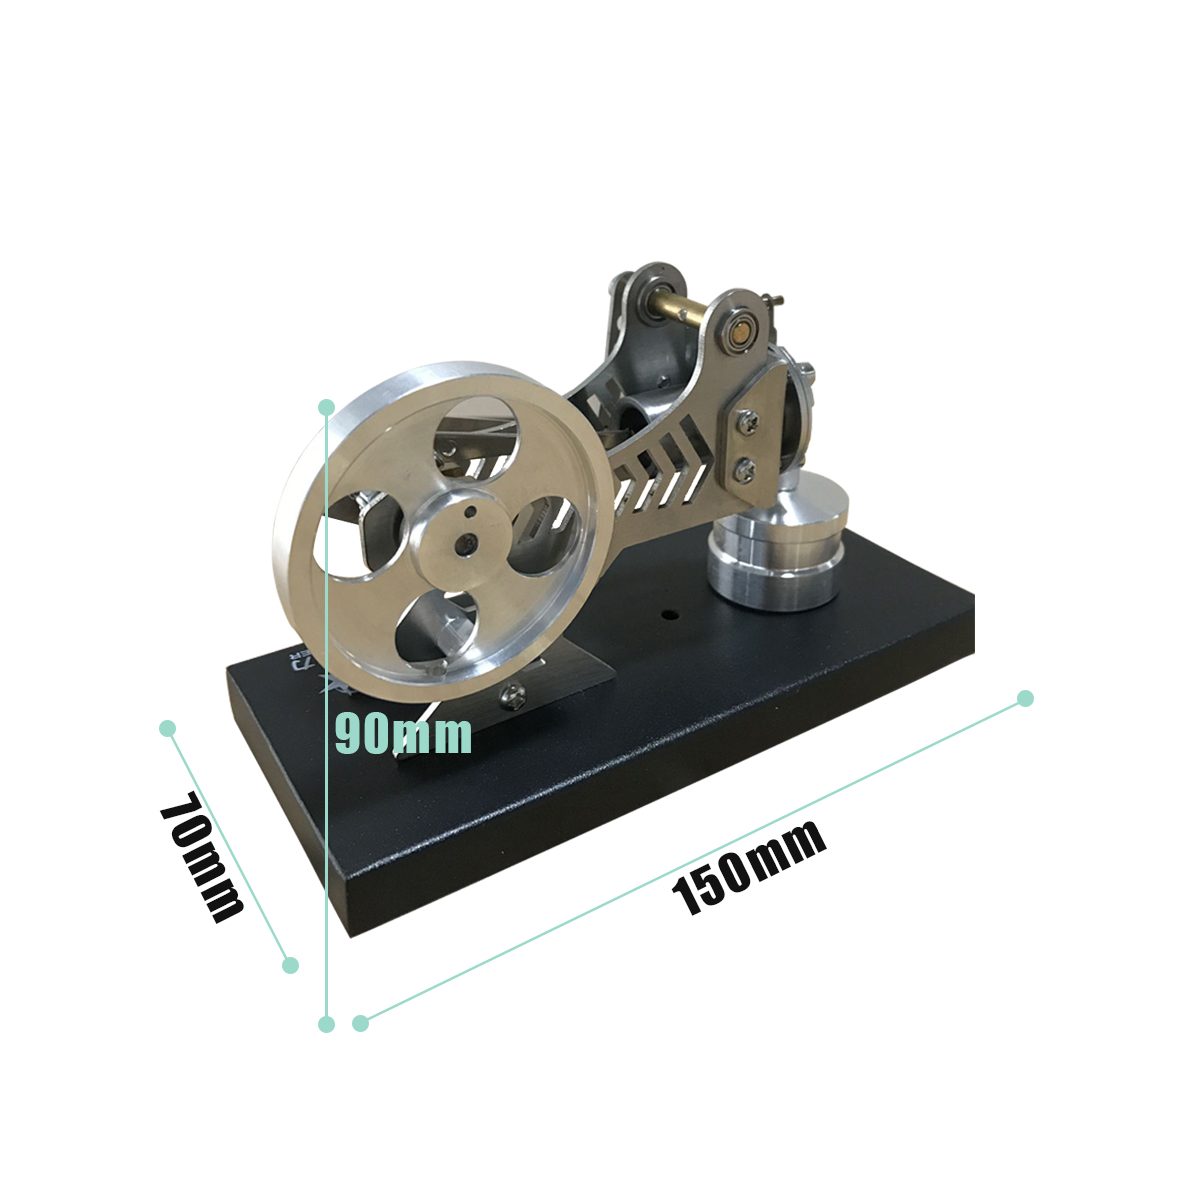 STARPOWER-Live-Vacuum-Engine-Hot-Air-Stirling-Engine-Model-Science-Study-Developmental-Toy-1240602-9